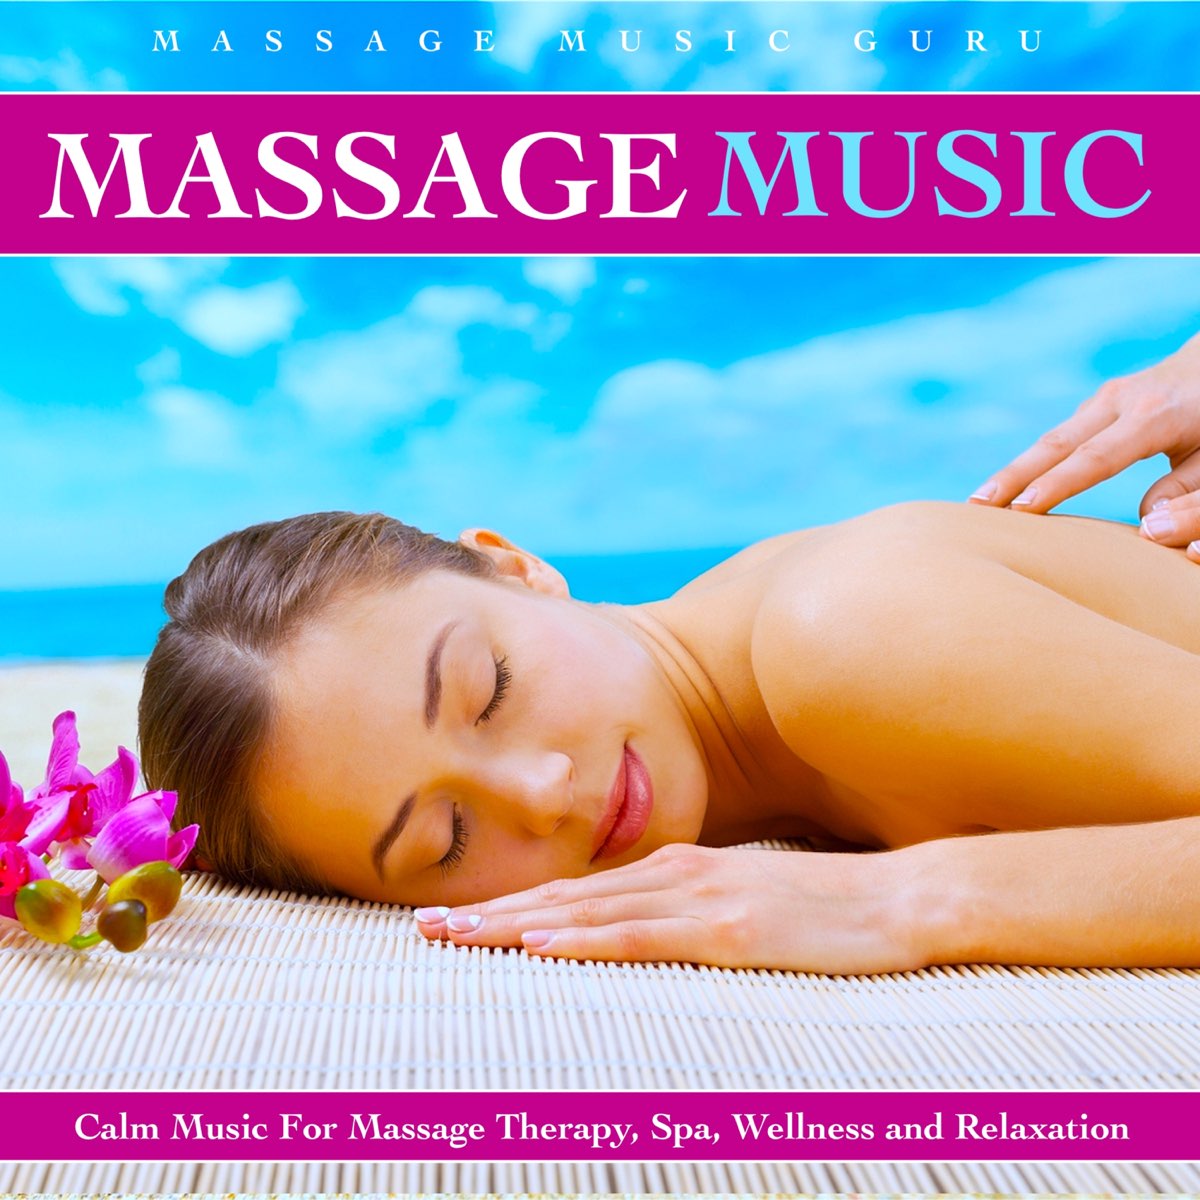 Massage музыка. Музыка для массажа. Spa Therapy. Массаж под музыку. Красивая музыка для массажа слушать